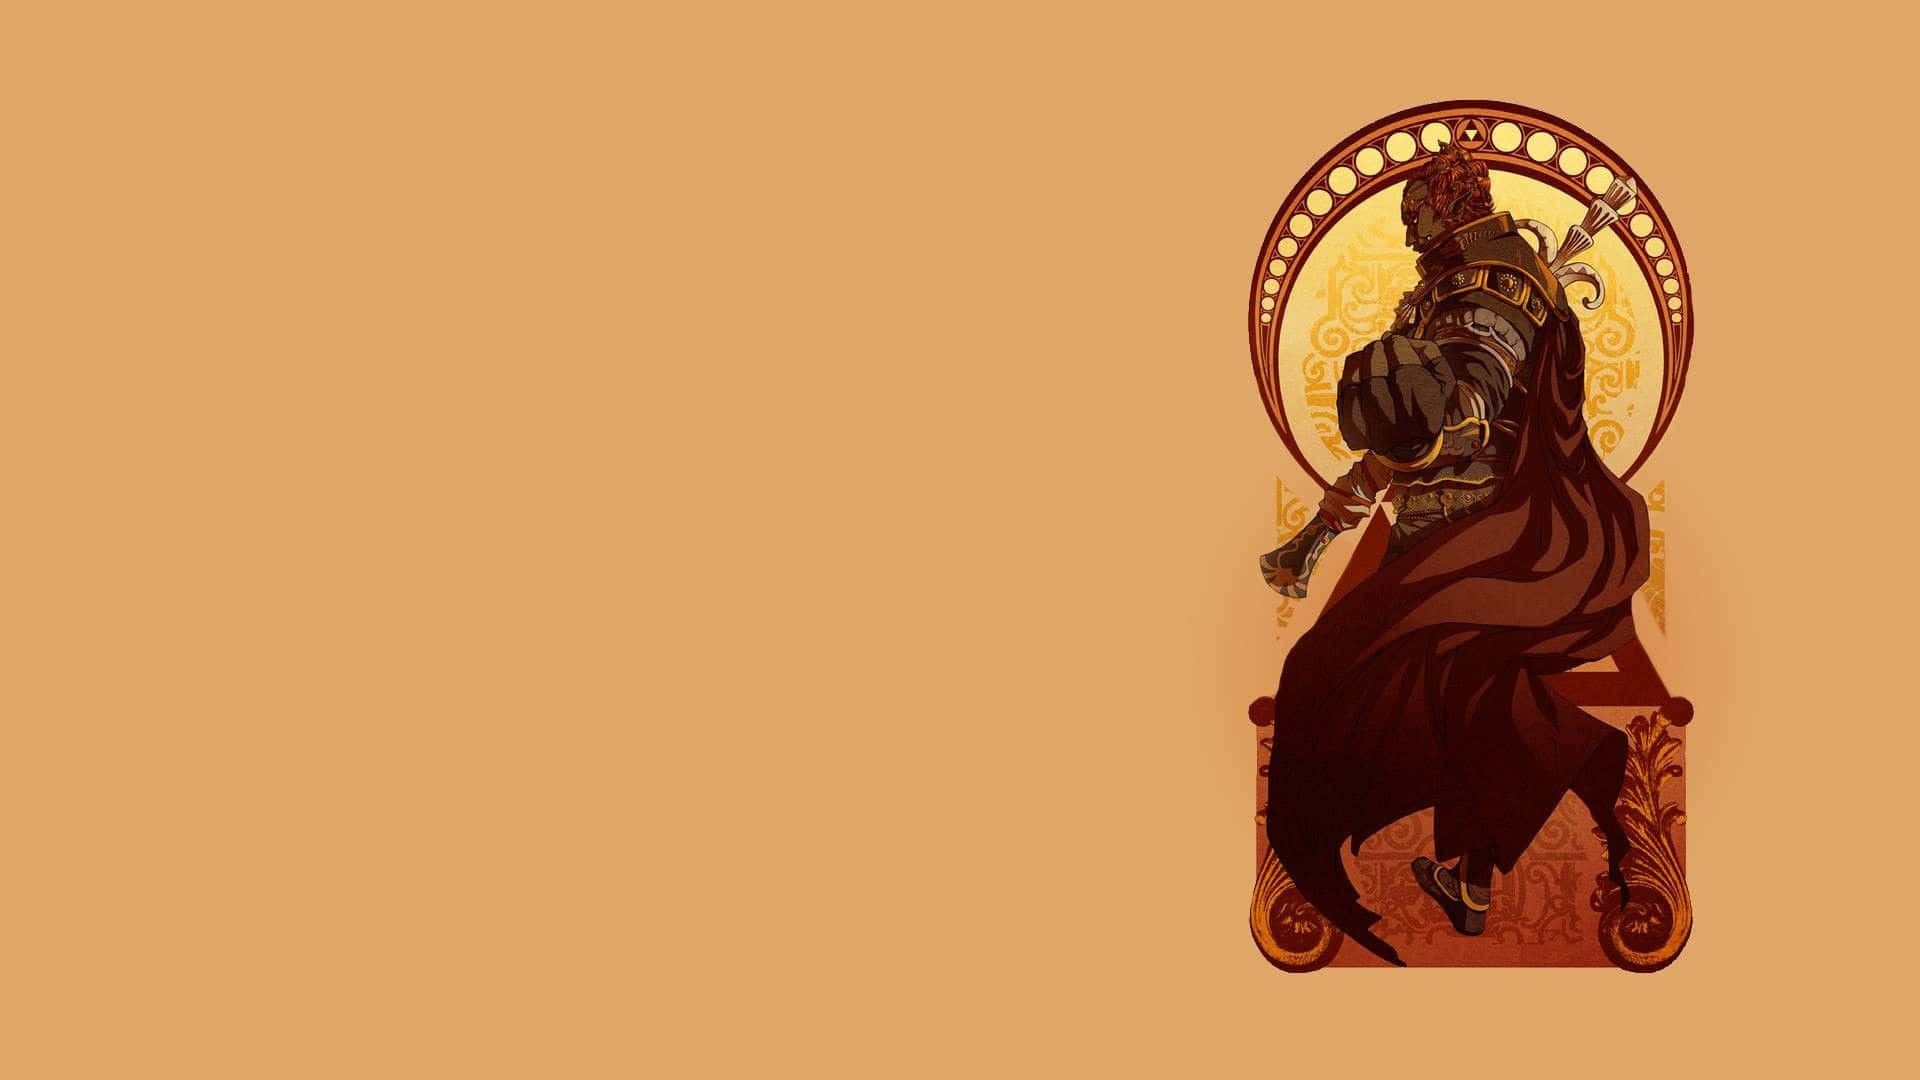 The Mighty Ganondorf - Emperor of the Dark Realm Wallpaper